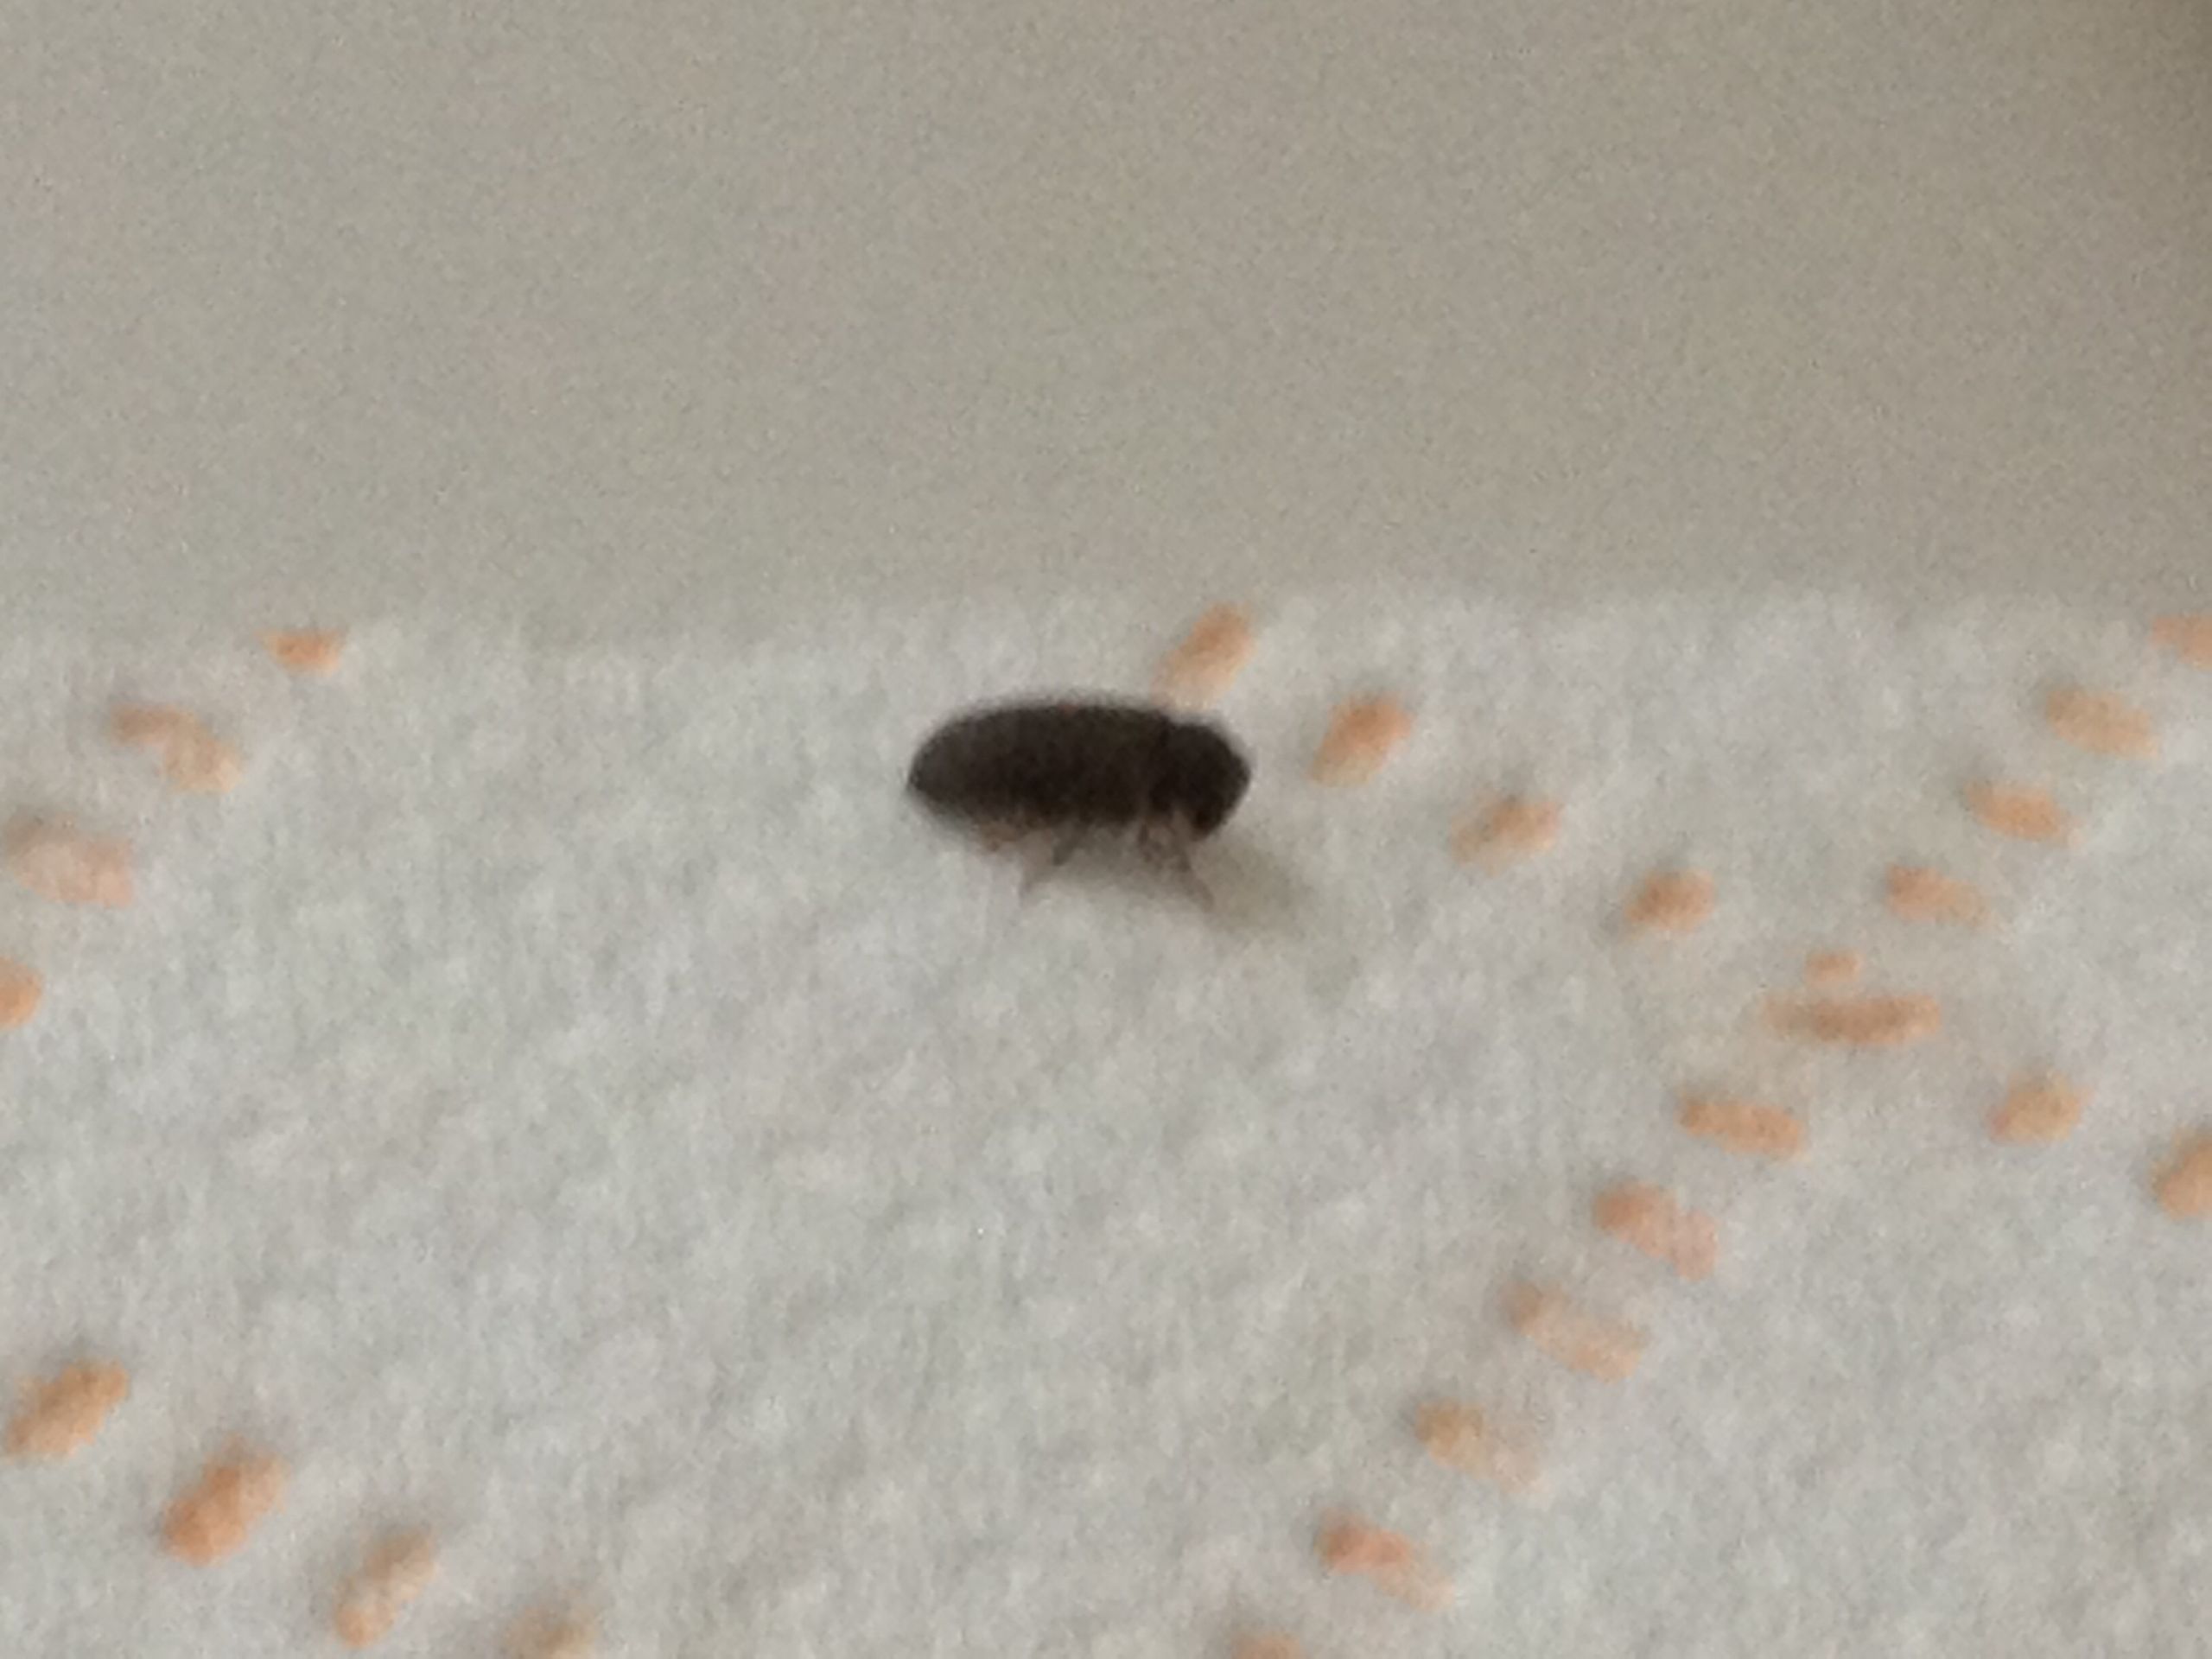 Small Black Flies In Bathroom
 NaturePlus Please help me identify tiny black bugs found